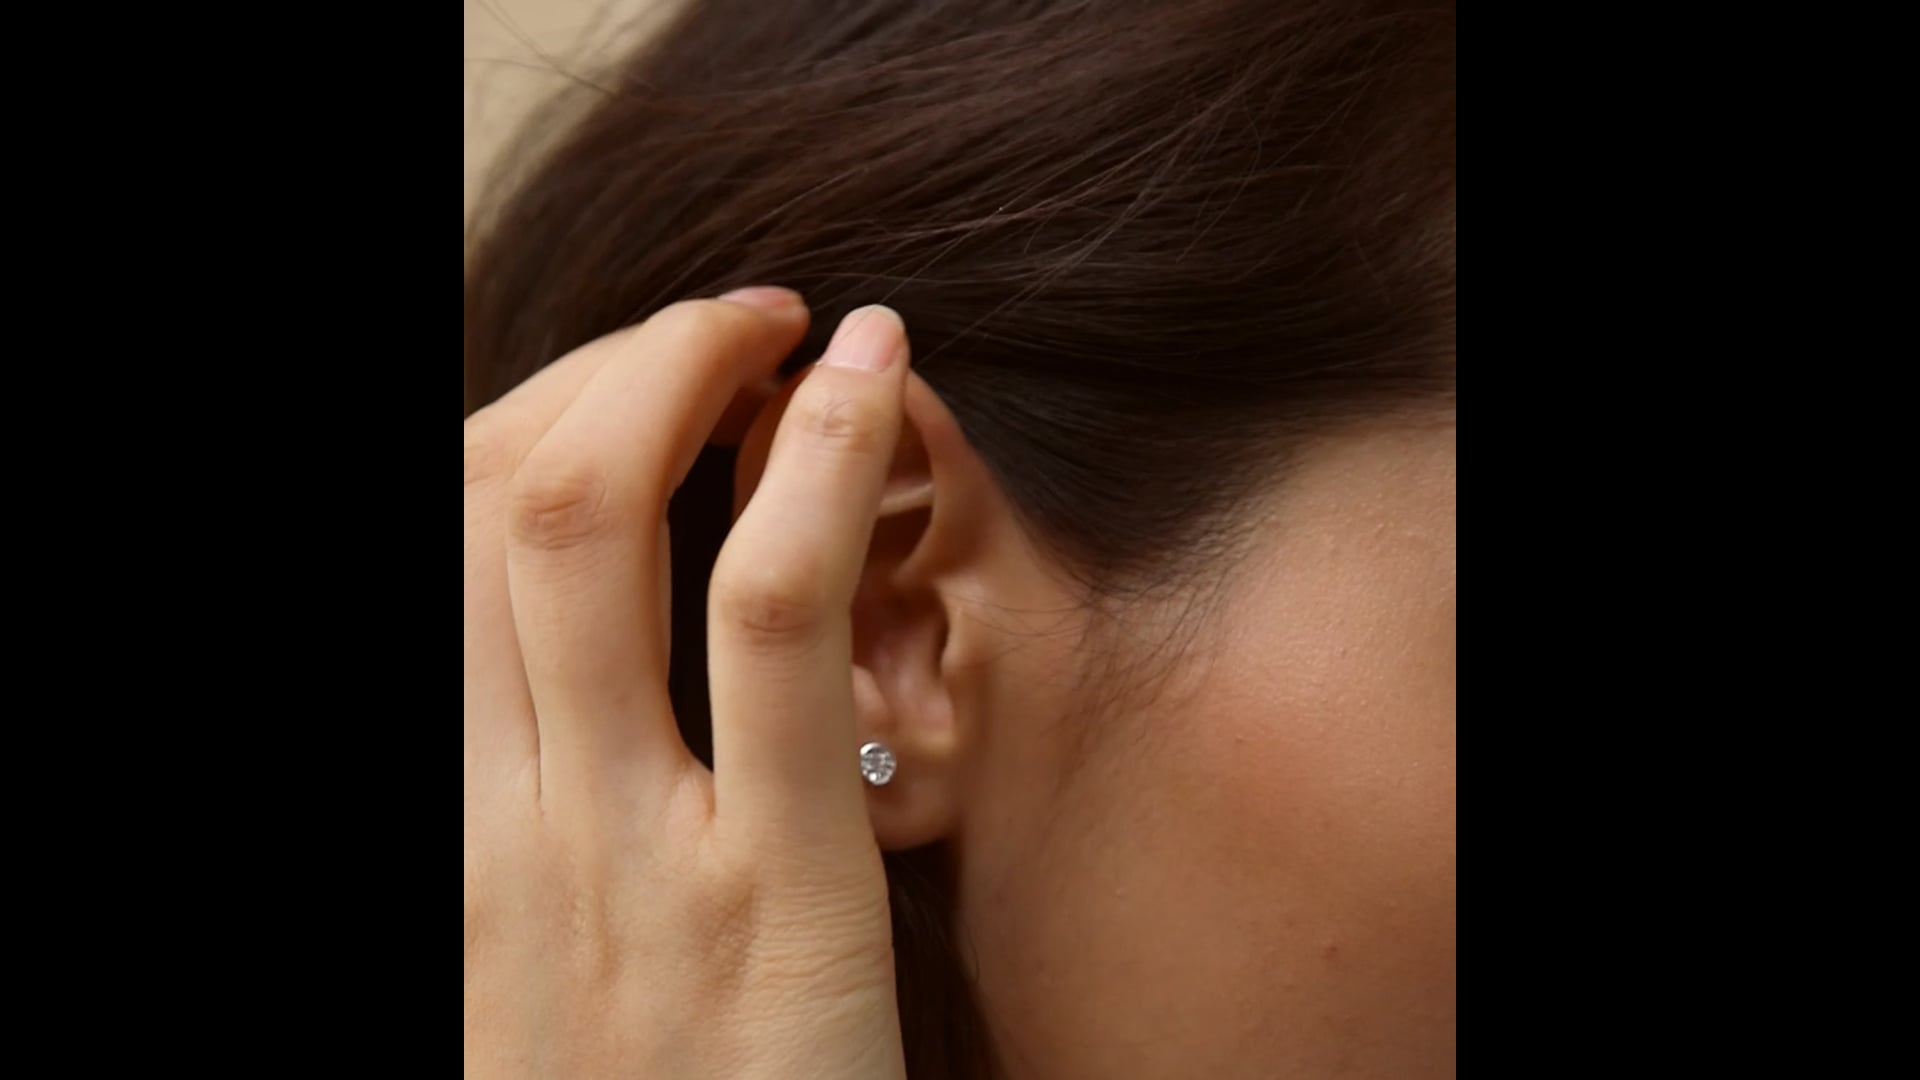 Stud Earrings with Diamonds